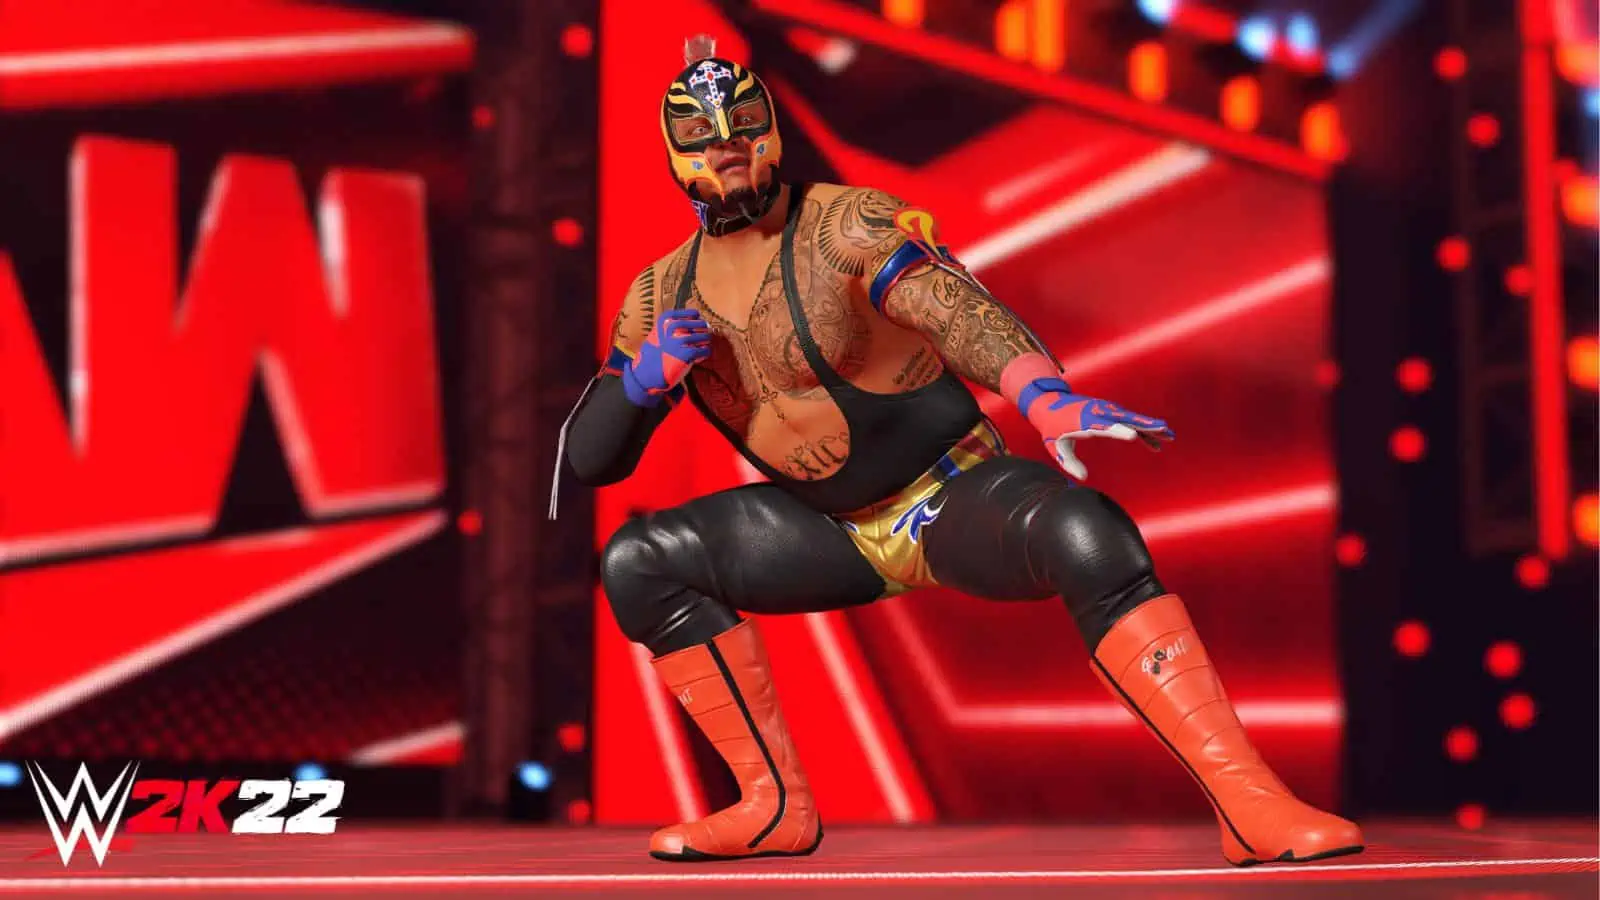 WWE 2K22 game character